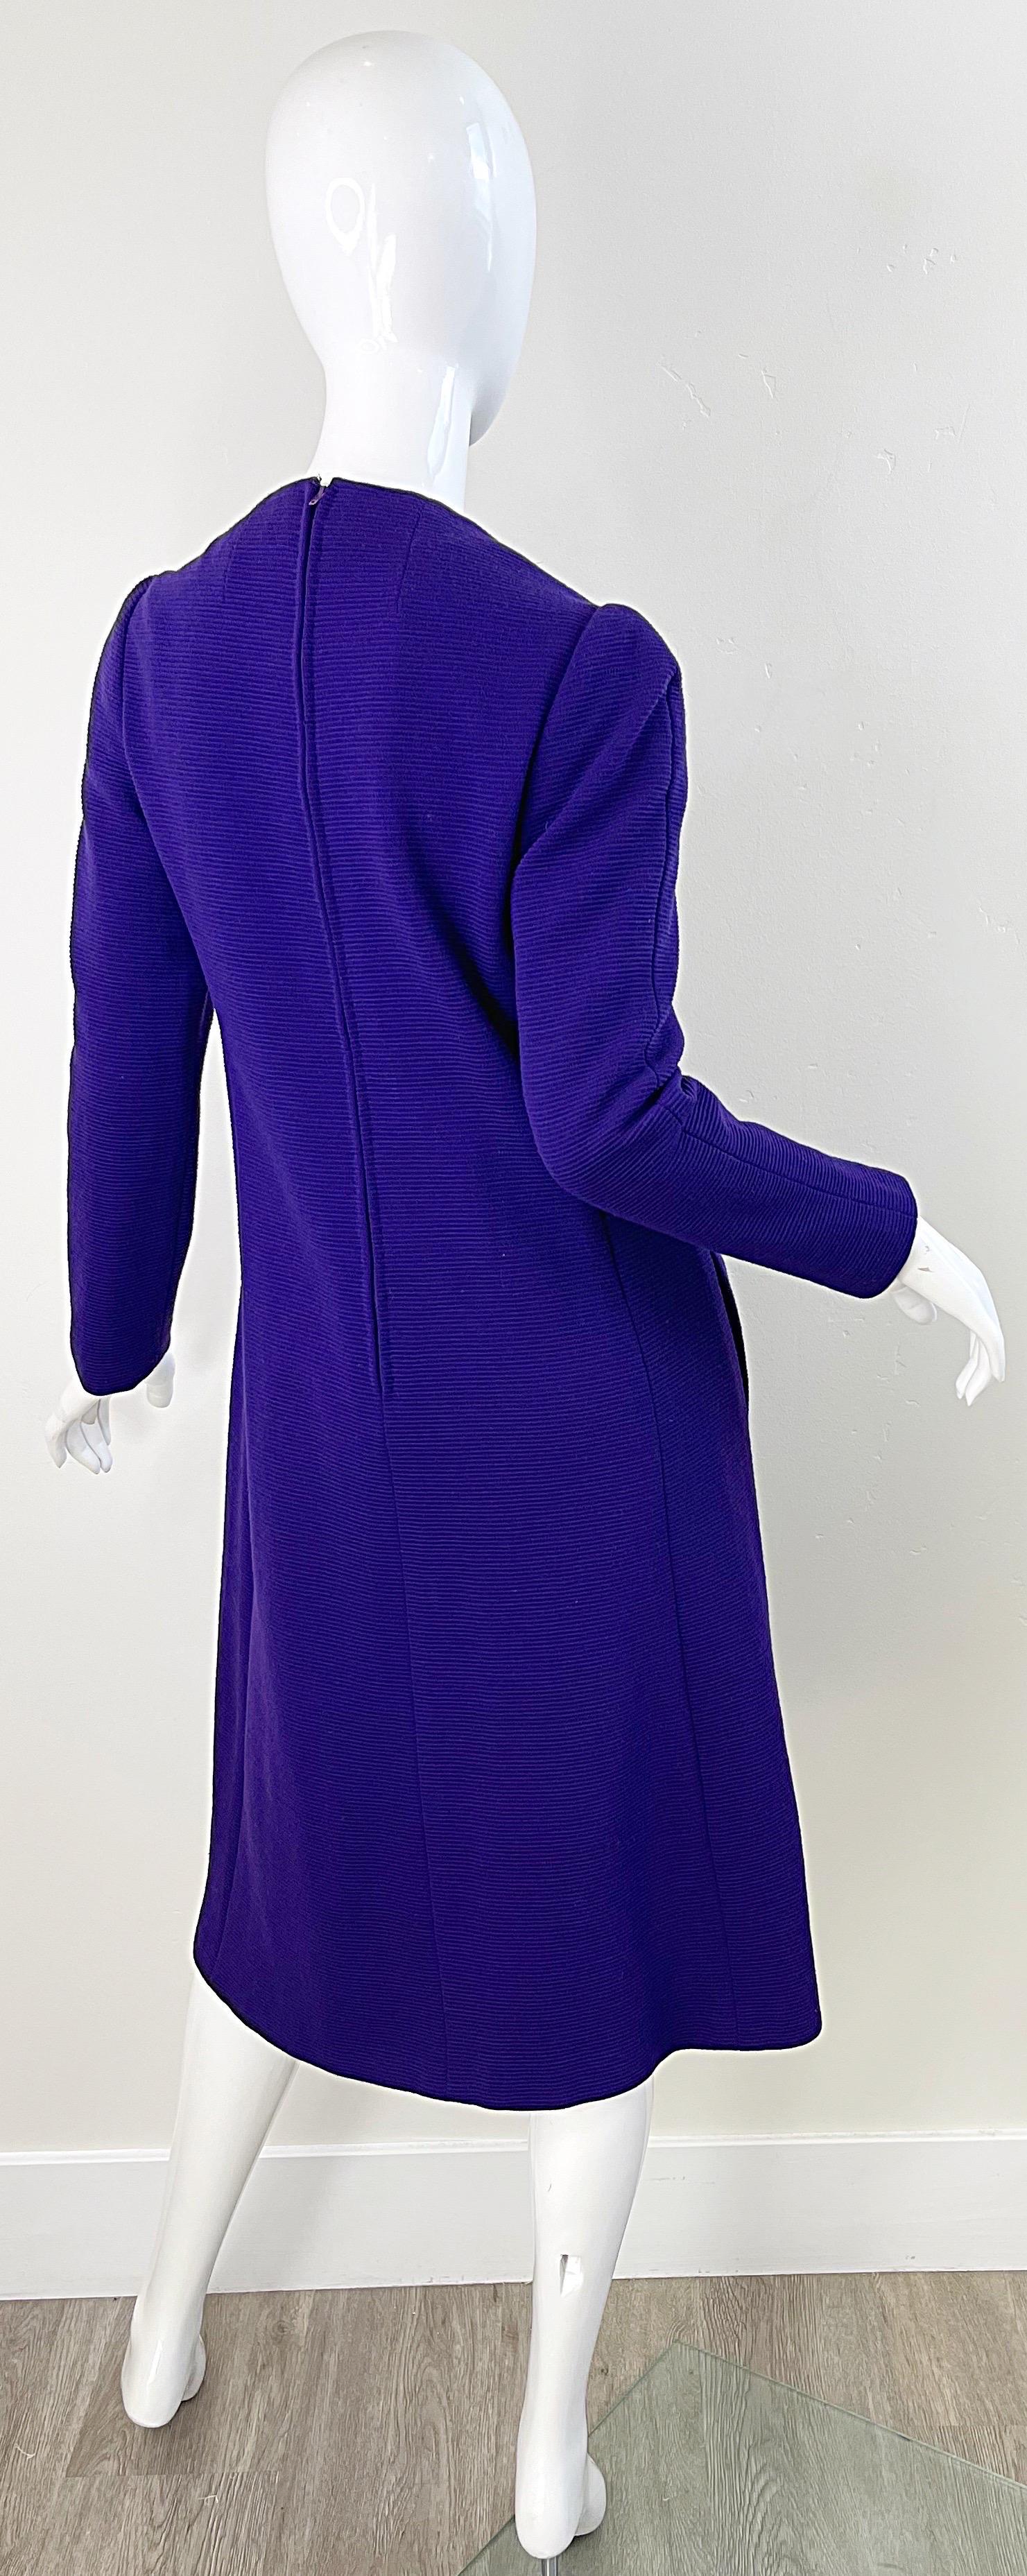 Women's 1970s Halston Purple Wool Long Sleeve Vintage Chic 70s Tailored Dress For Sale